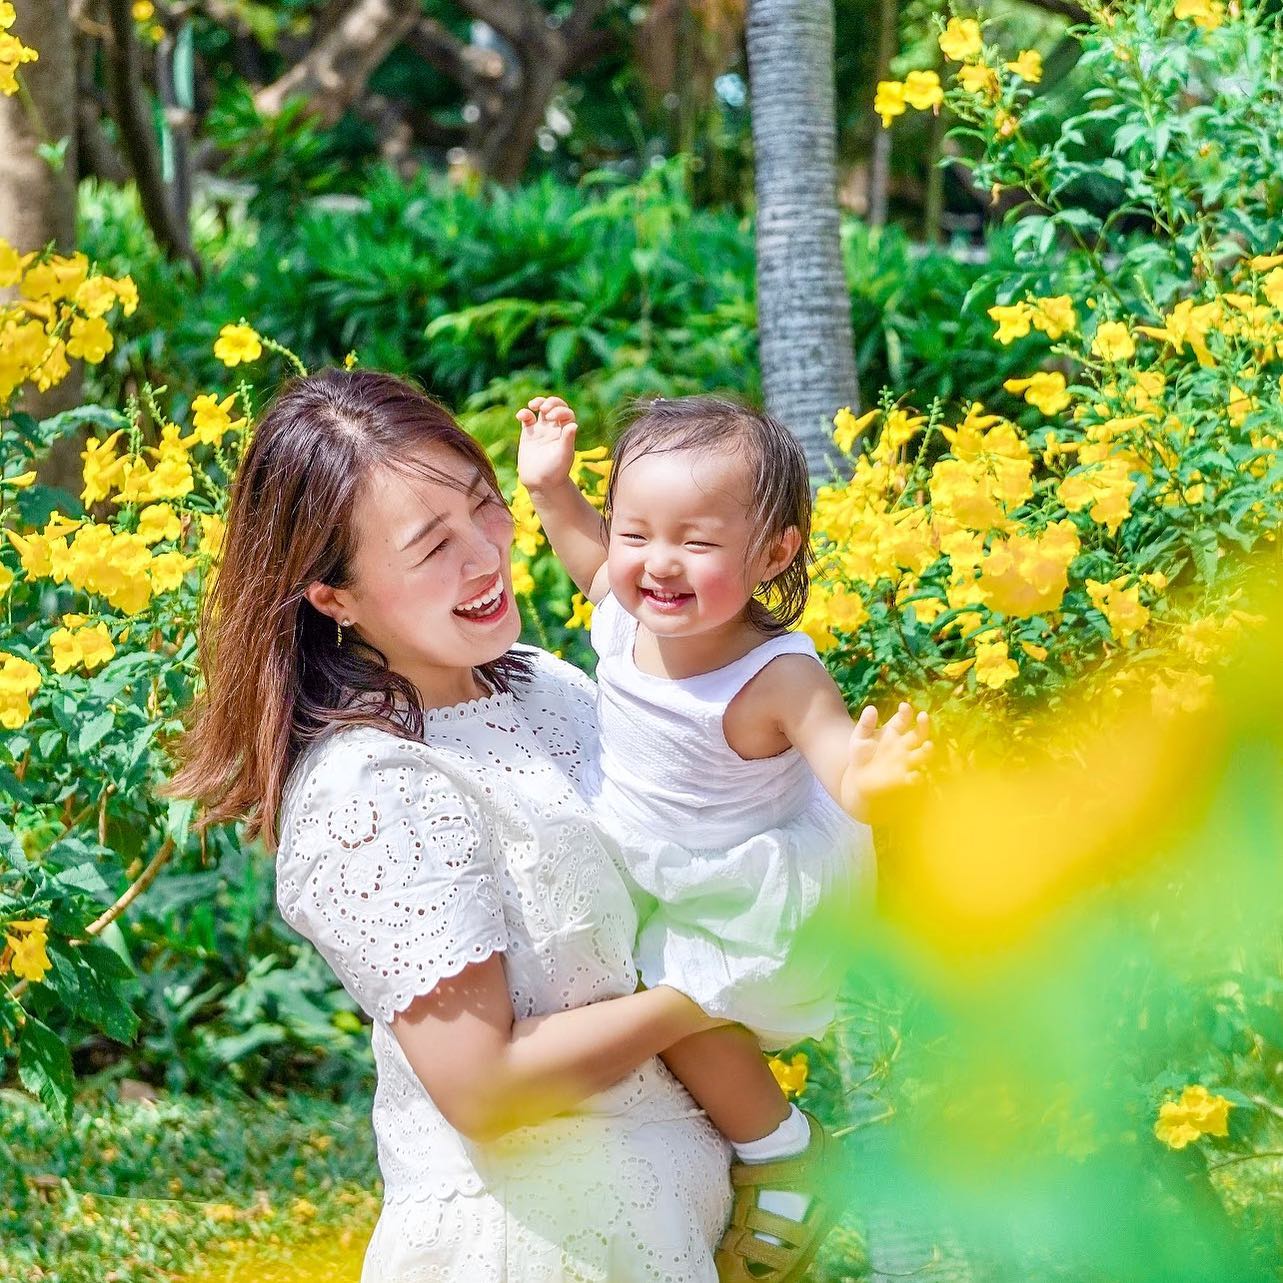 ⁡
⁡
Updated profile photo.
Mom and daughter portrait taken in Bangkok.
⁡
新しいプロフィール写真は
タイ旅行中、バンコクの公園で撮ってもらったもの。
娘のはじける笑顔がお気に入りです！
⁡
⁡
GWのタイは午前中にもかかわらず暑い暑い…
しかし、汗だくなのは写真では伝わるまい😜
⁡
⁡
⁡
__📷photo credit________________
⁡
📍 #BenchasiriPark
⁡
🗓 April, 2023
Photo taken by @yu.me.bkk 
（special thanks🙏🏻💓）
_______________________________
⁡
⁡
⁡
#プロフィール写真#親子写真#女の子ママ
#バンコク旅行#タイ旅行#子連れ旅#ママトラベラー
#familyportrait#momanddaughter#momlife 
⁡